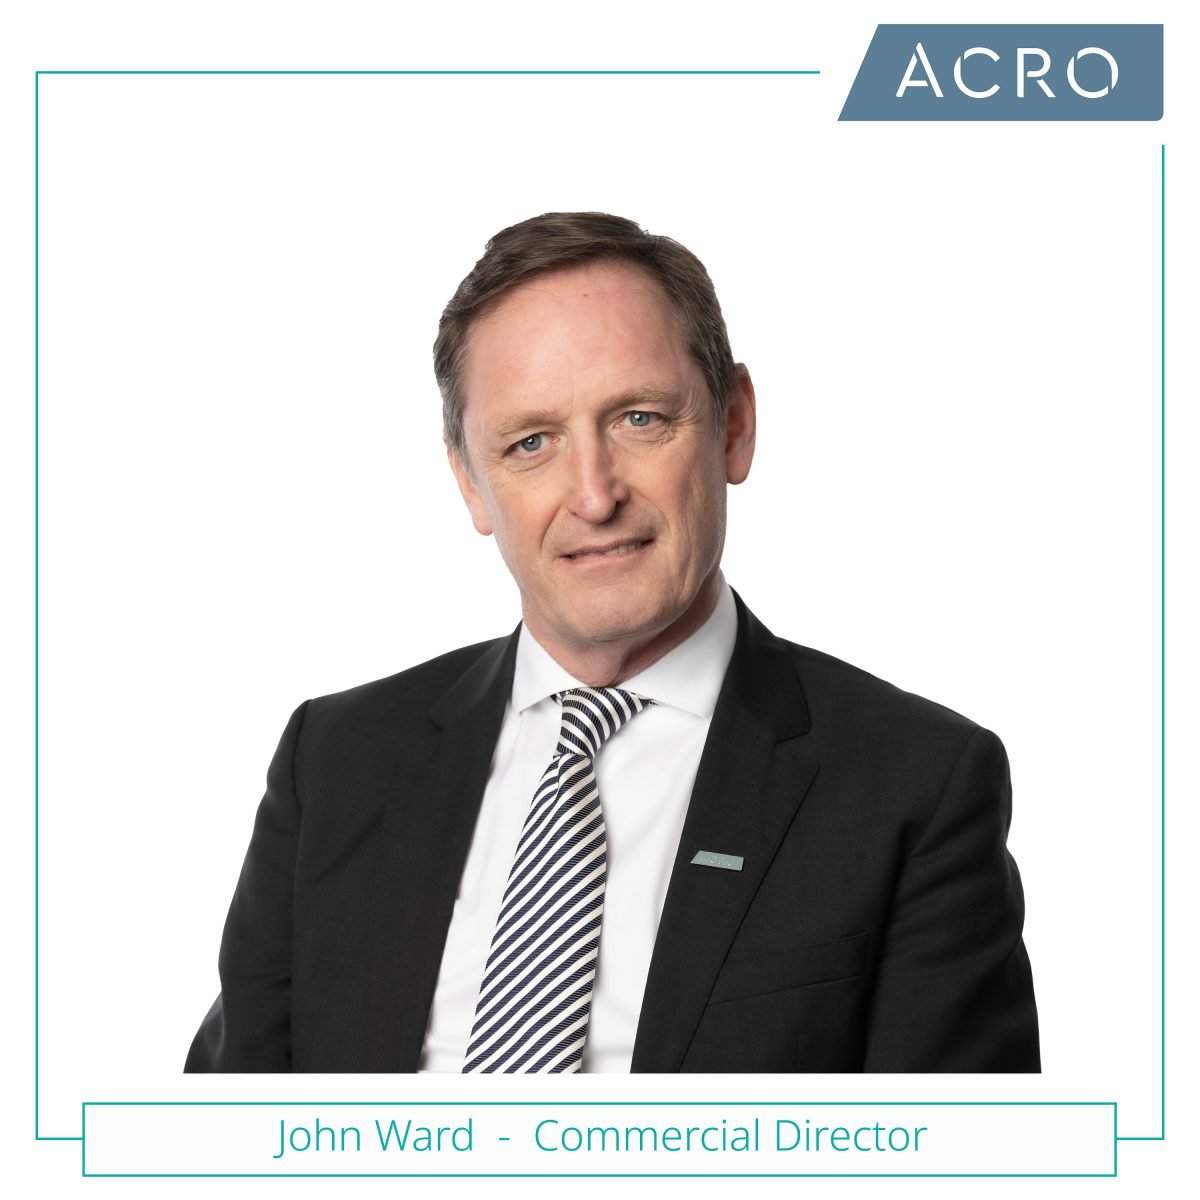 John Ward - Commecial Director 2